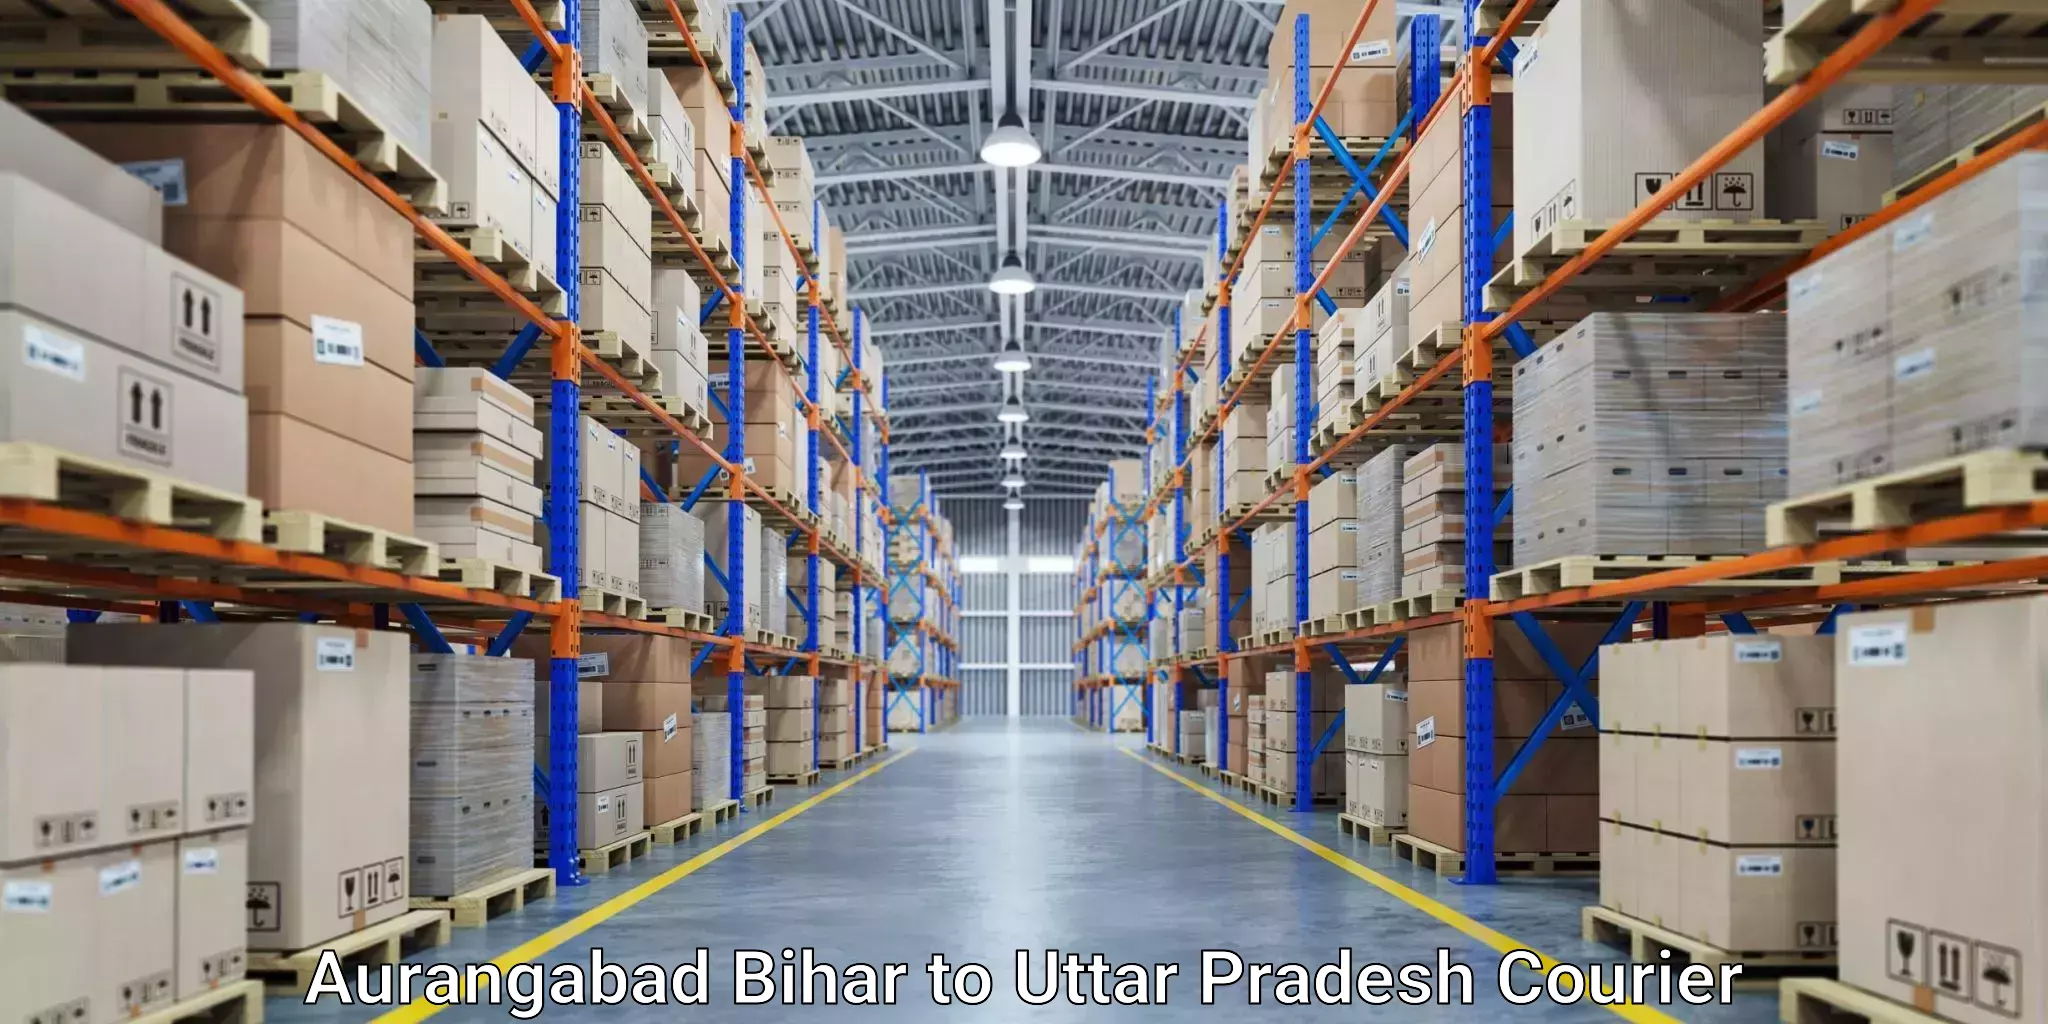 Reliable courier service Aurangabad Bihar to Sitapur